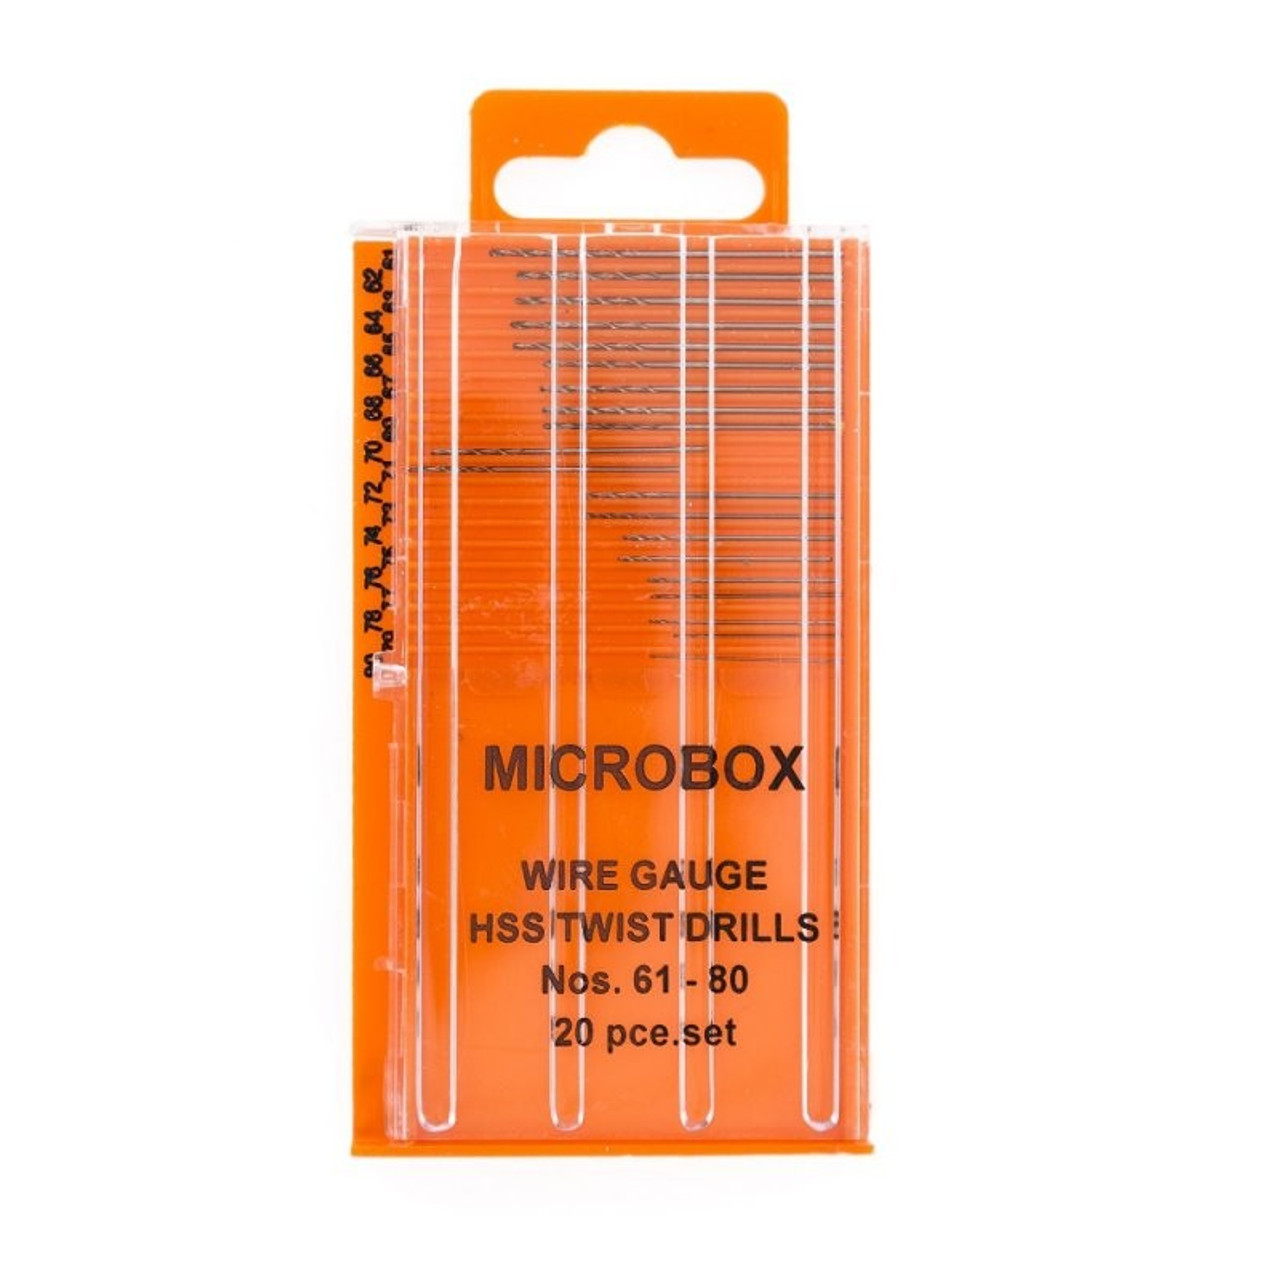 Modelcraft 20 Pce Microbox Drill Set (No.61 - 80)